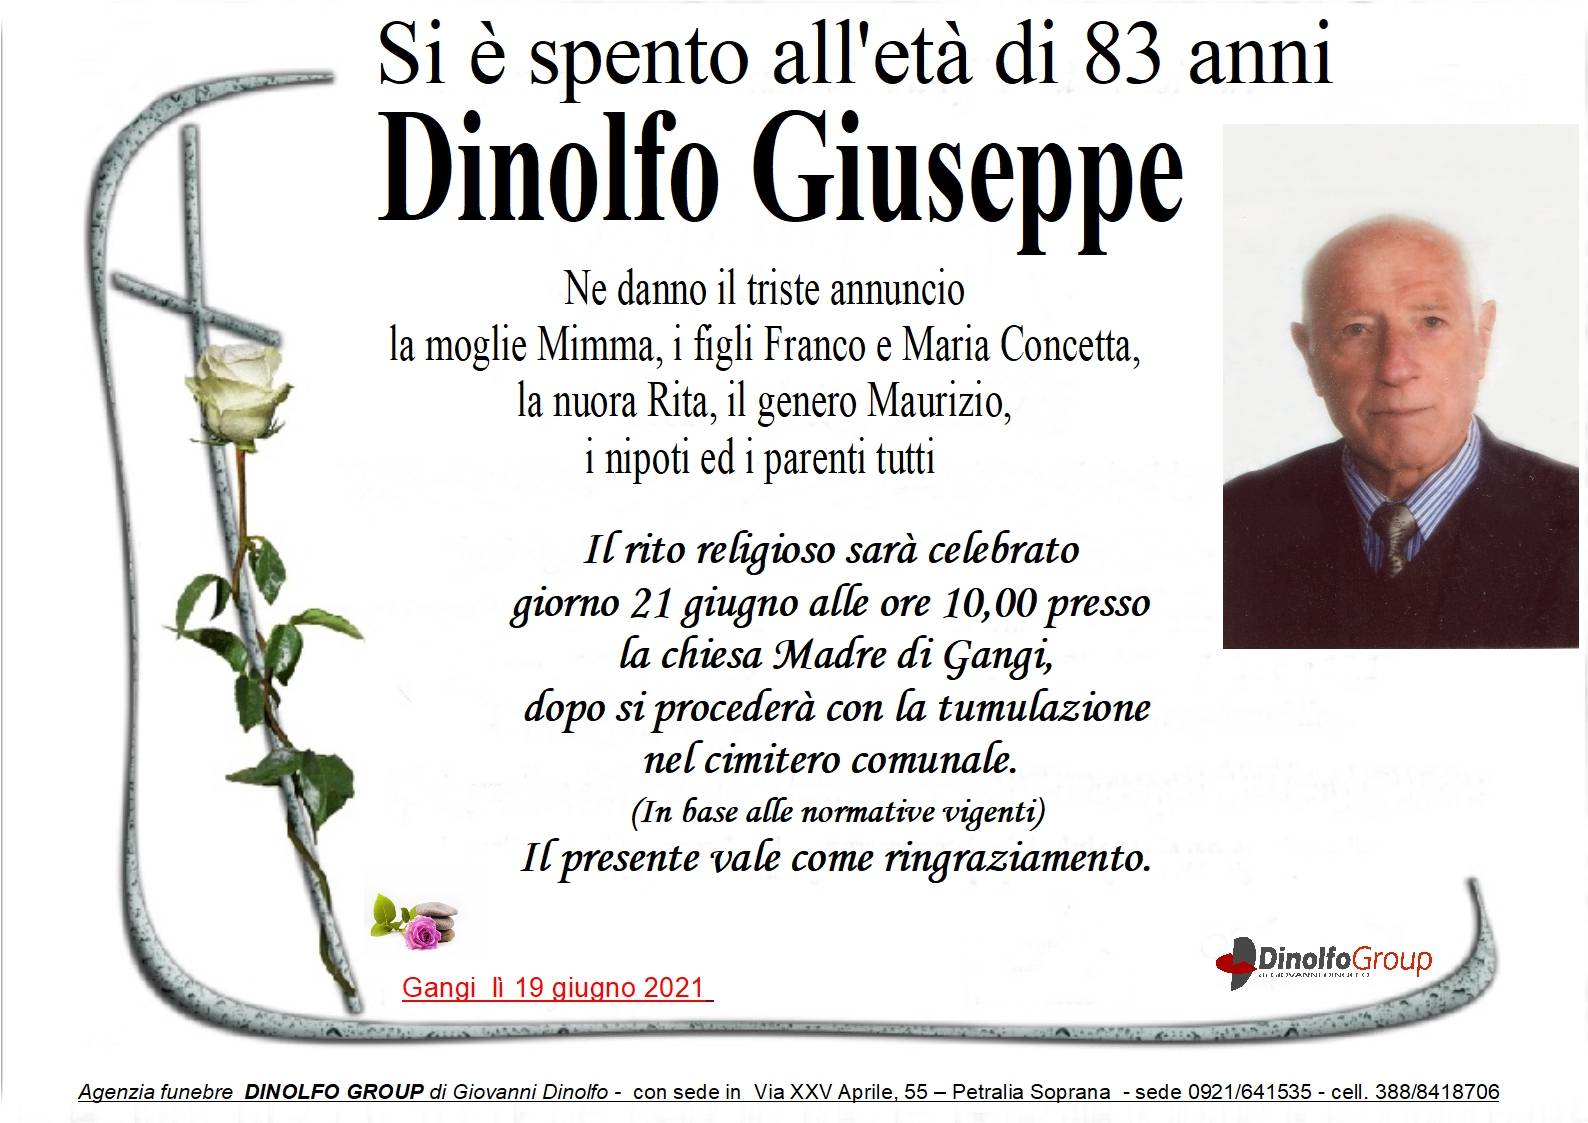 Giuseppe Dinolfo